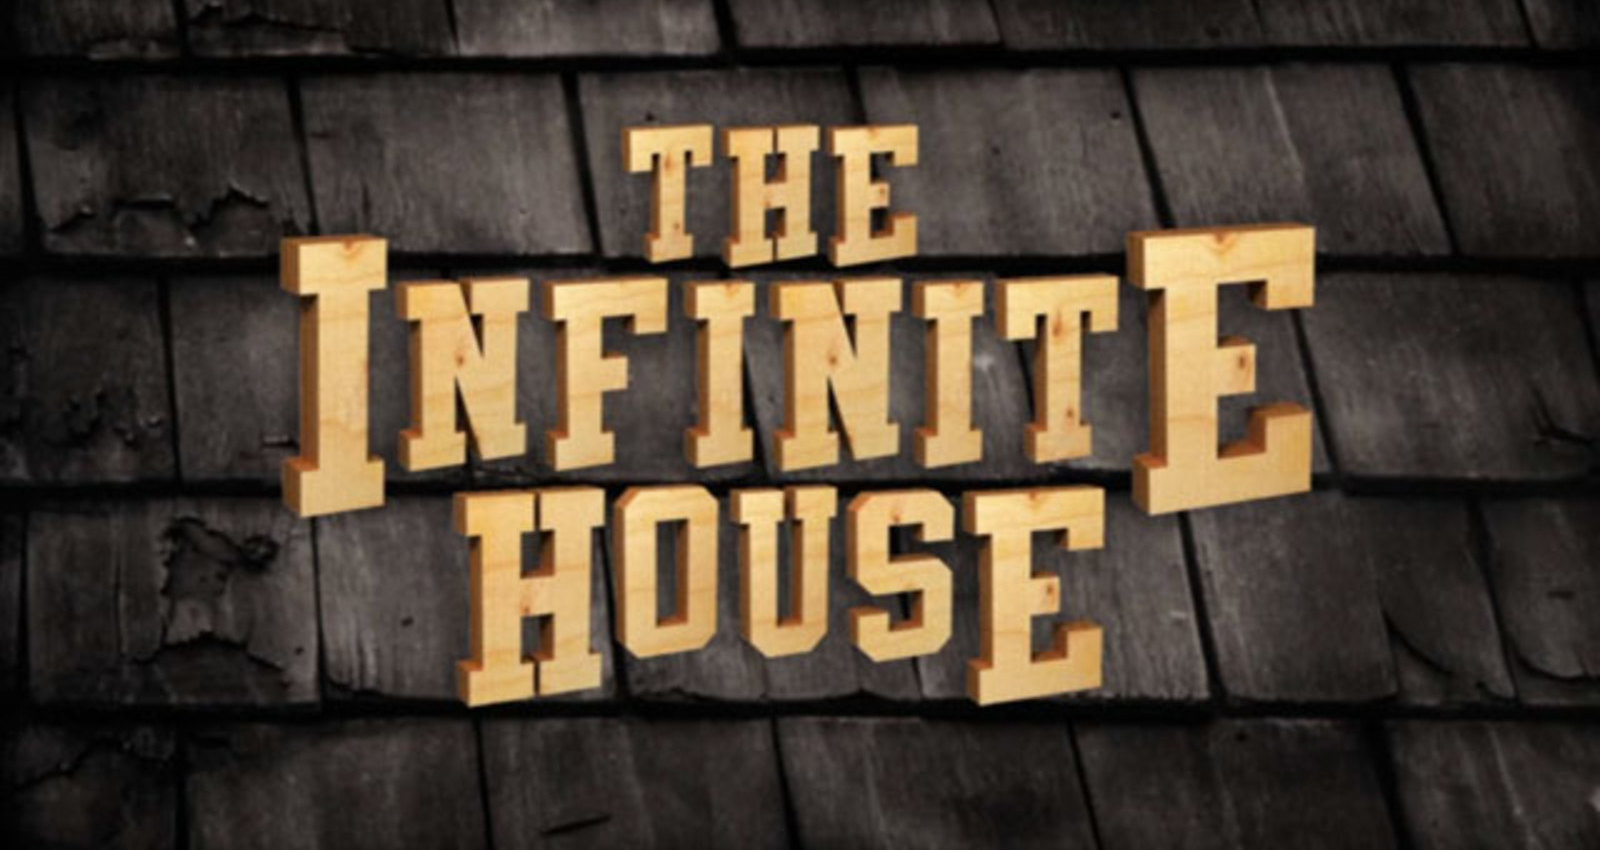 THE INFINITE HOUSE